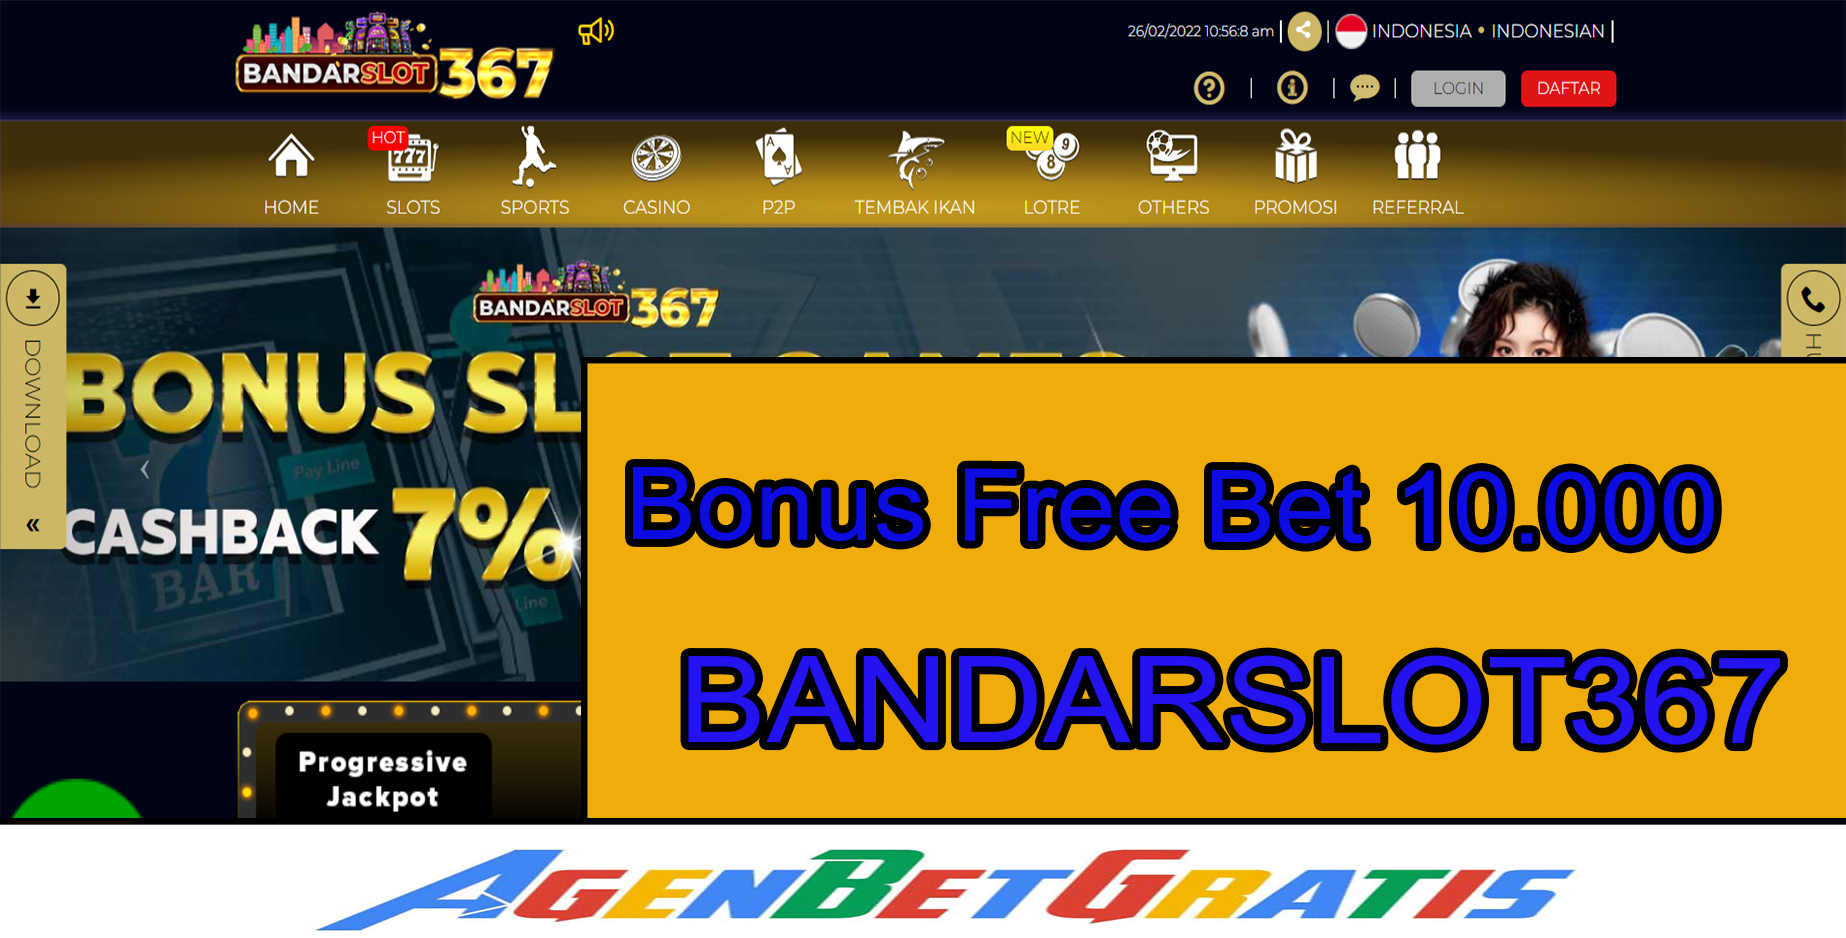 BANDARSLOT367 - Bonus FreeBet 10.000